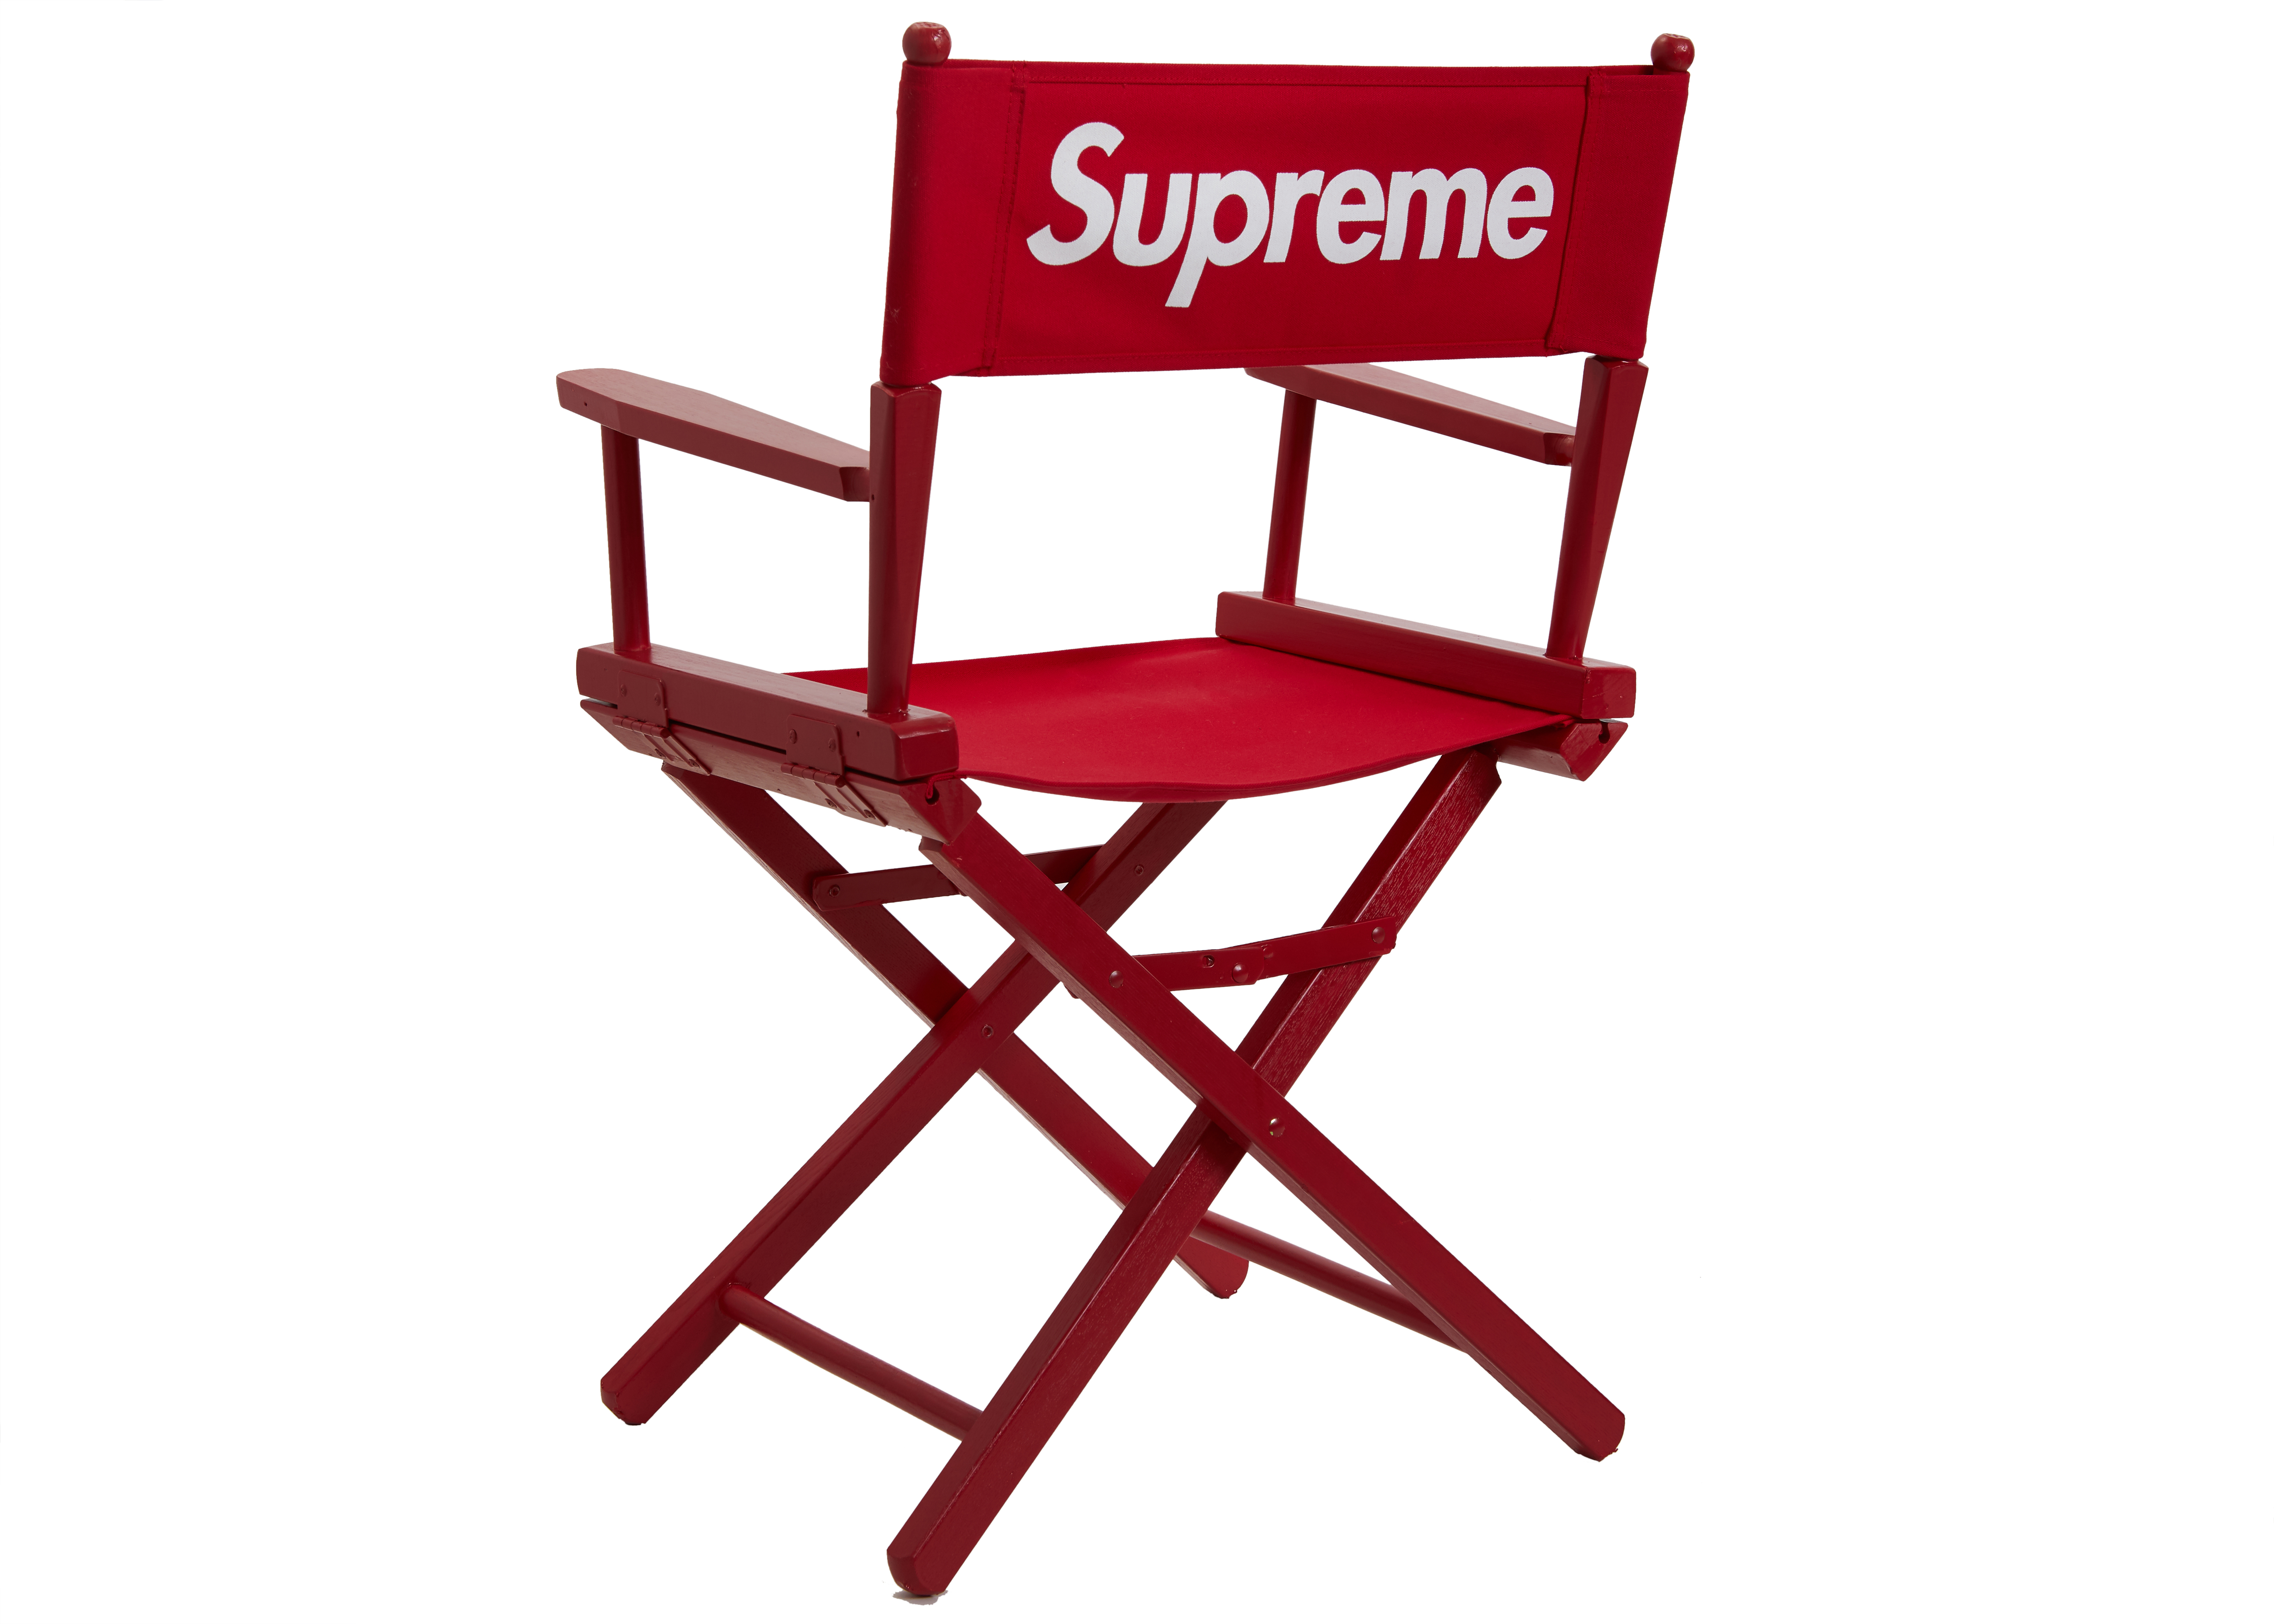 Supreme Chair Stockx Deals, 52% OFF | espirituviajero.com